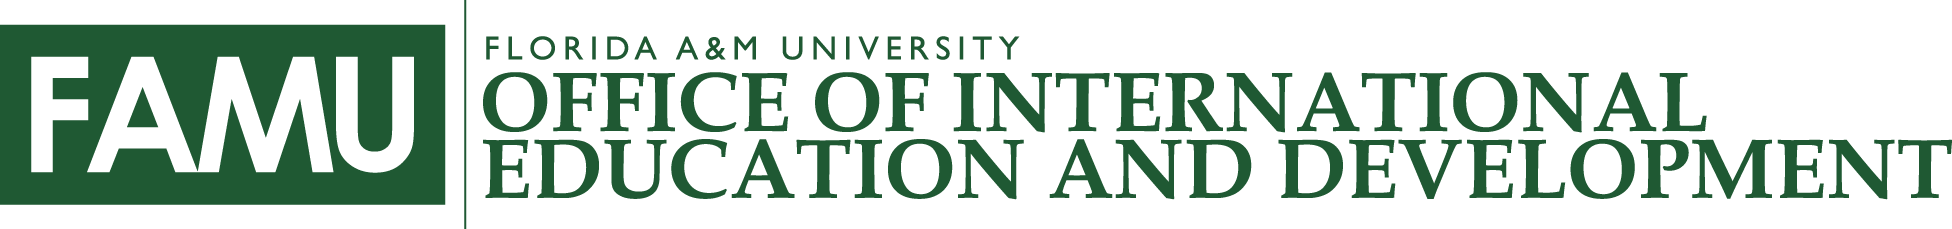 Office of International Education and Development - Florida A&M University